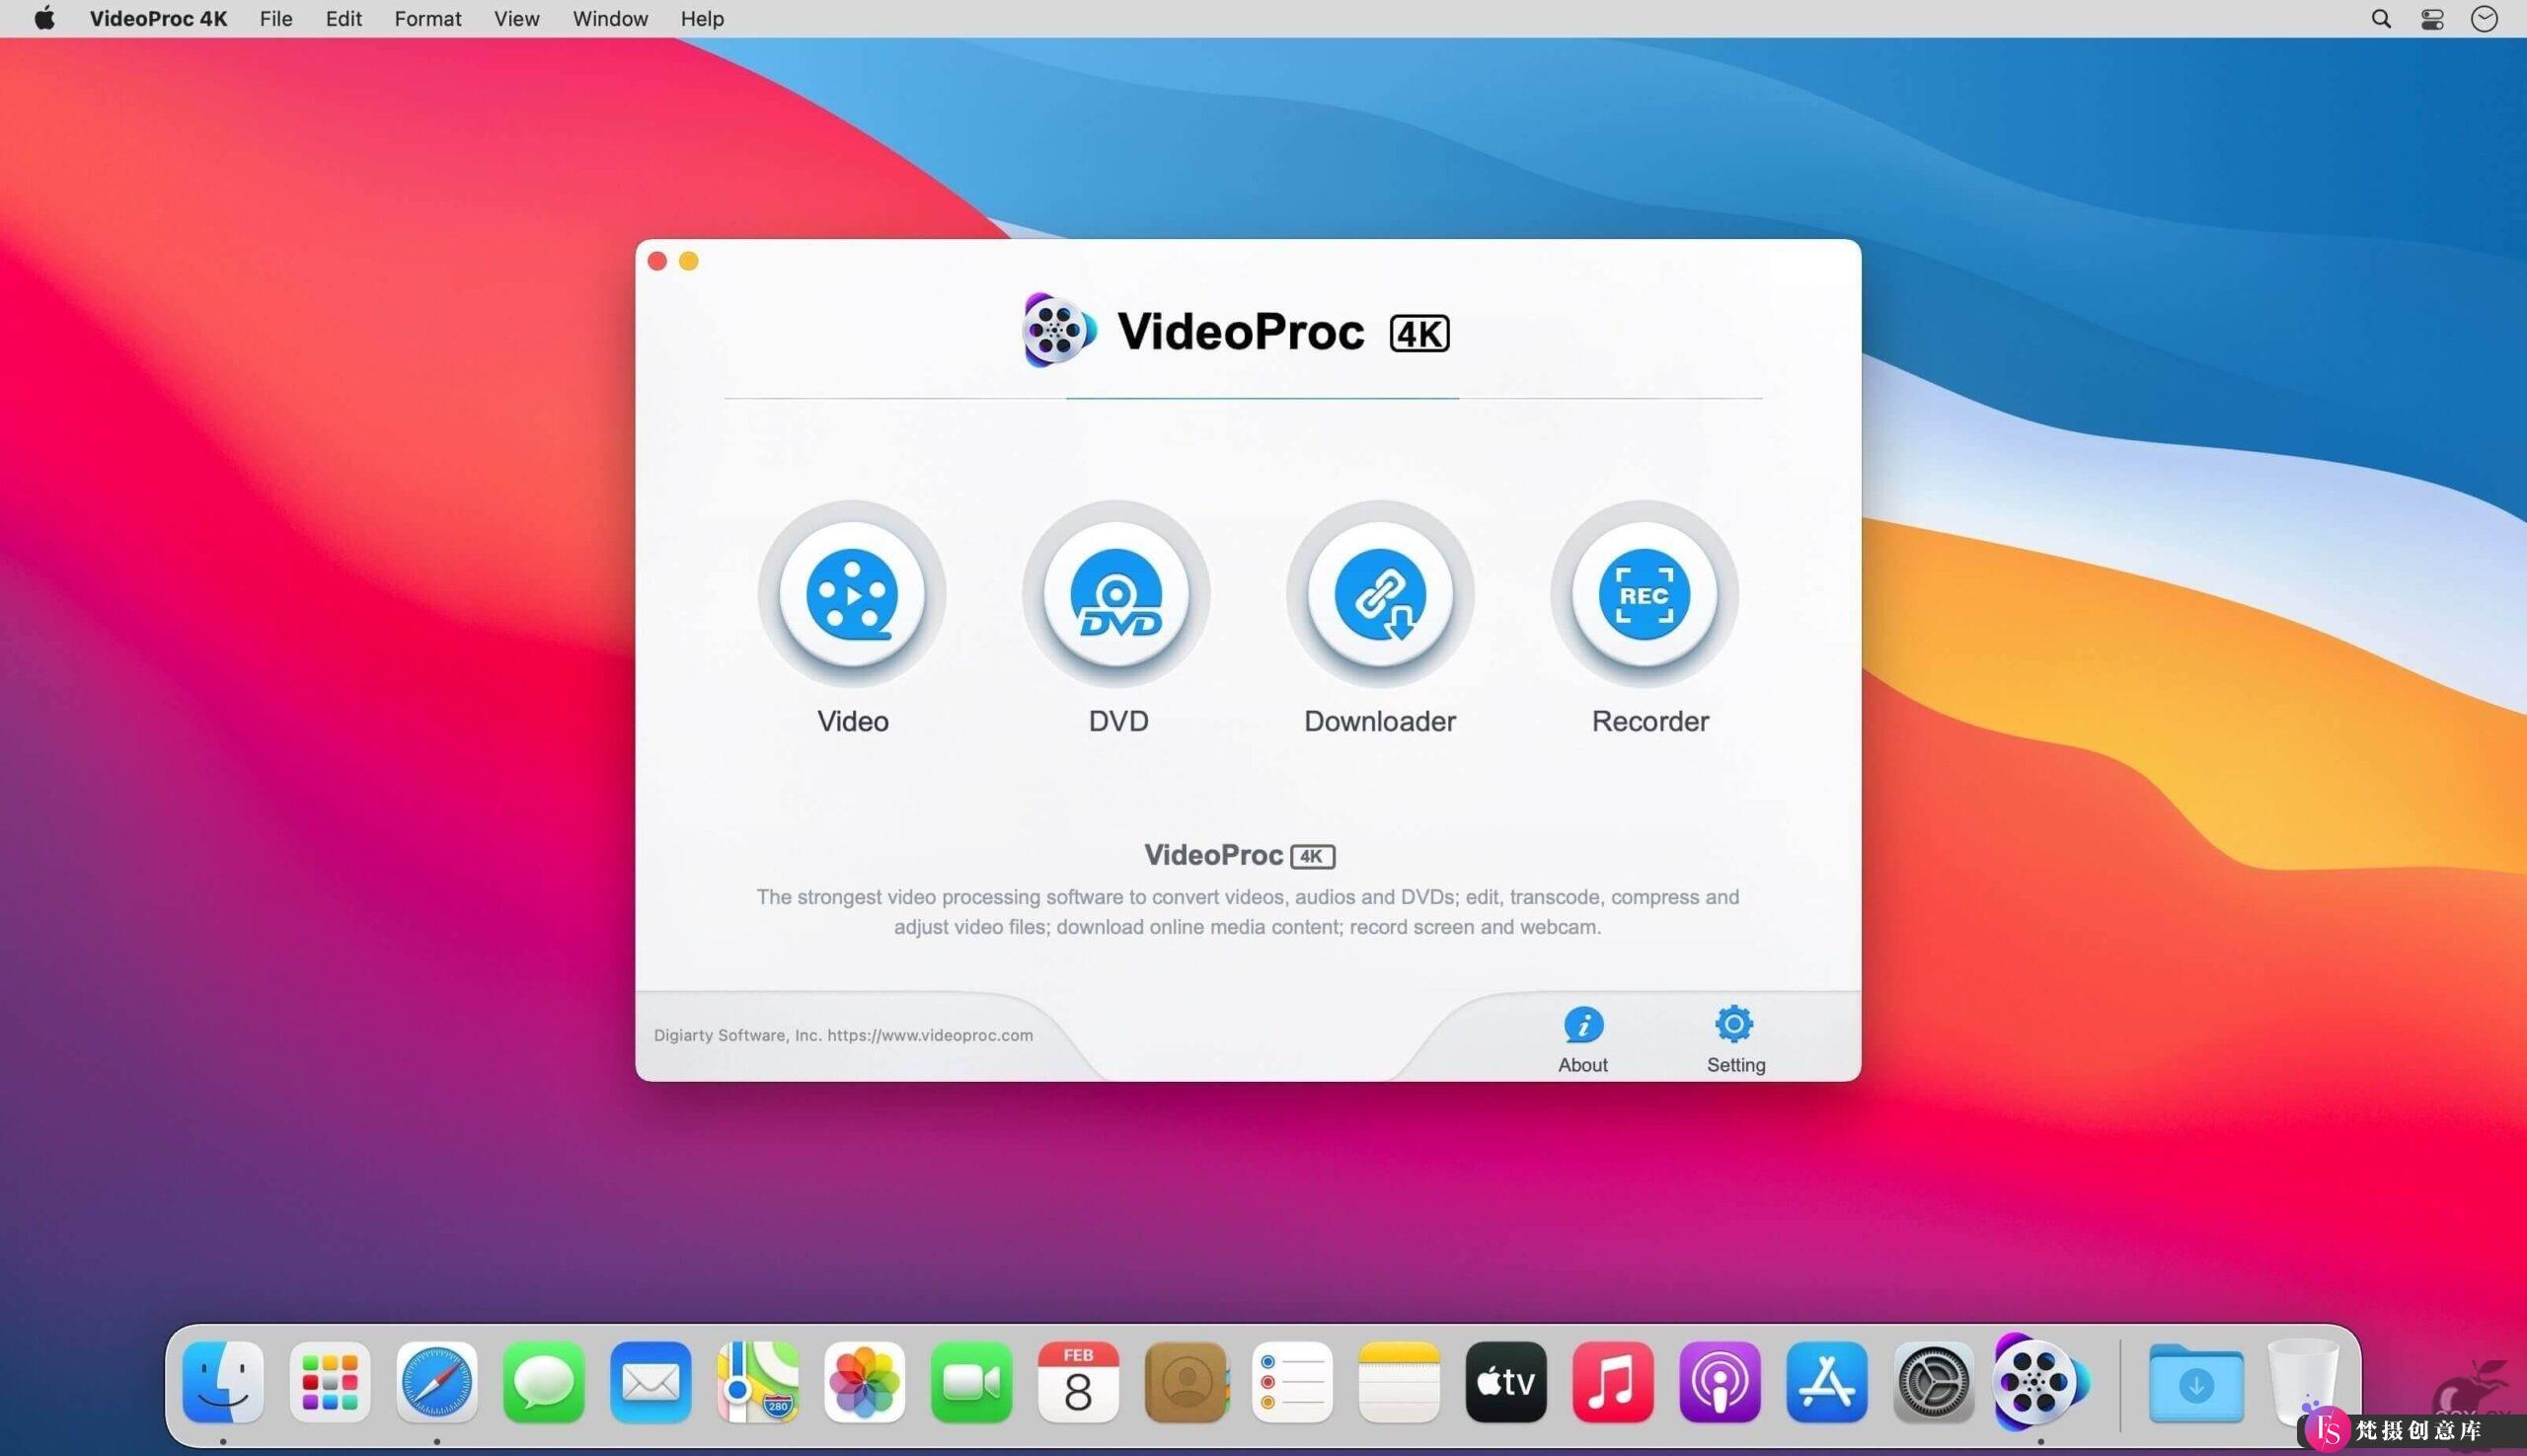 VideoProc Converter 4K For Mac v5.6 全新的4K视频处理转换工具-梵摄创意库